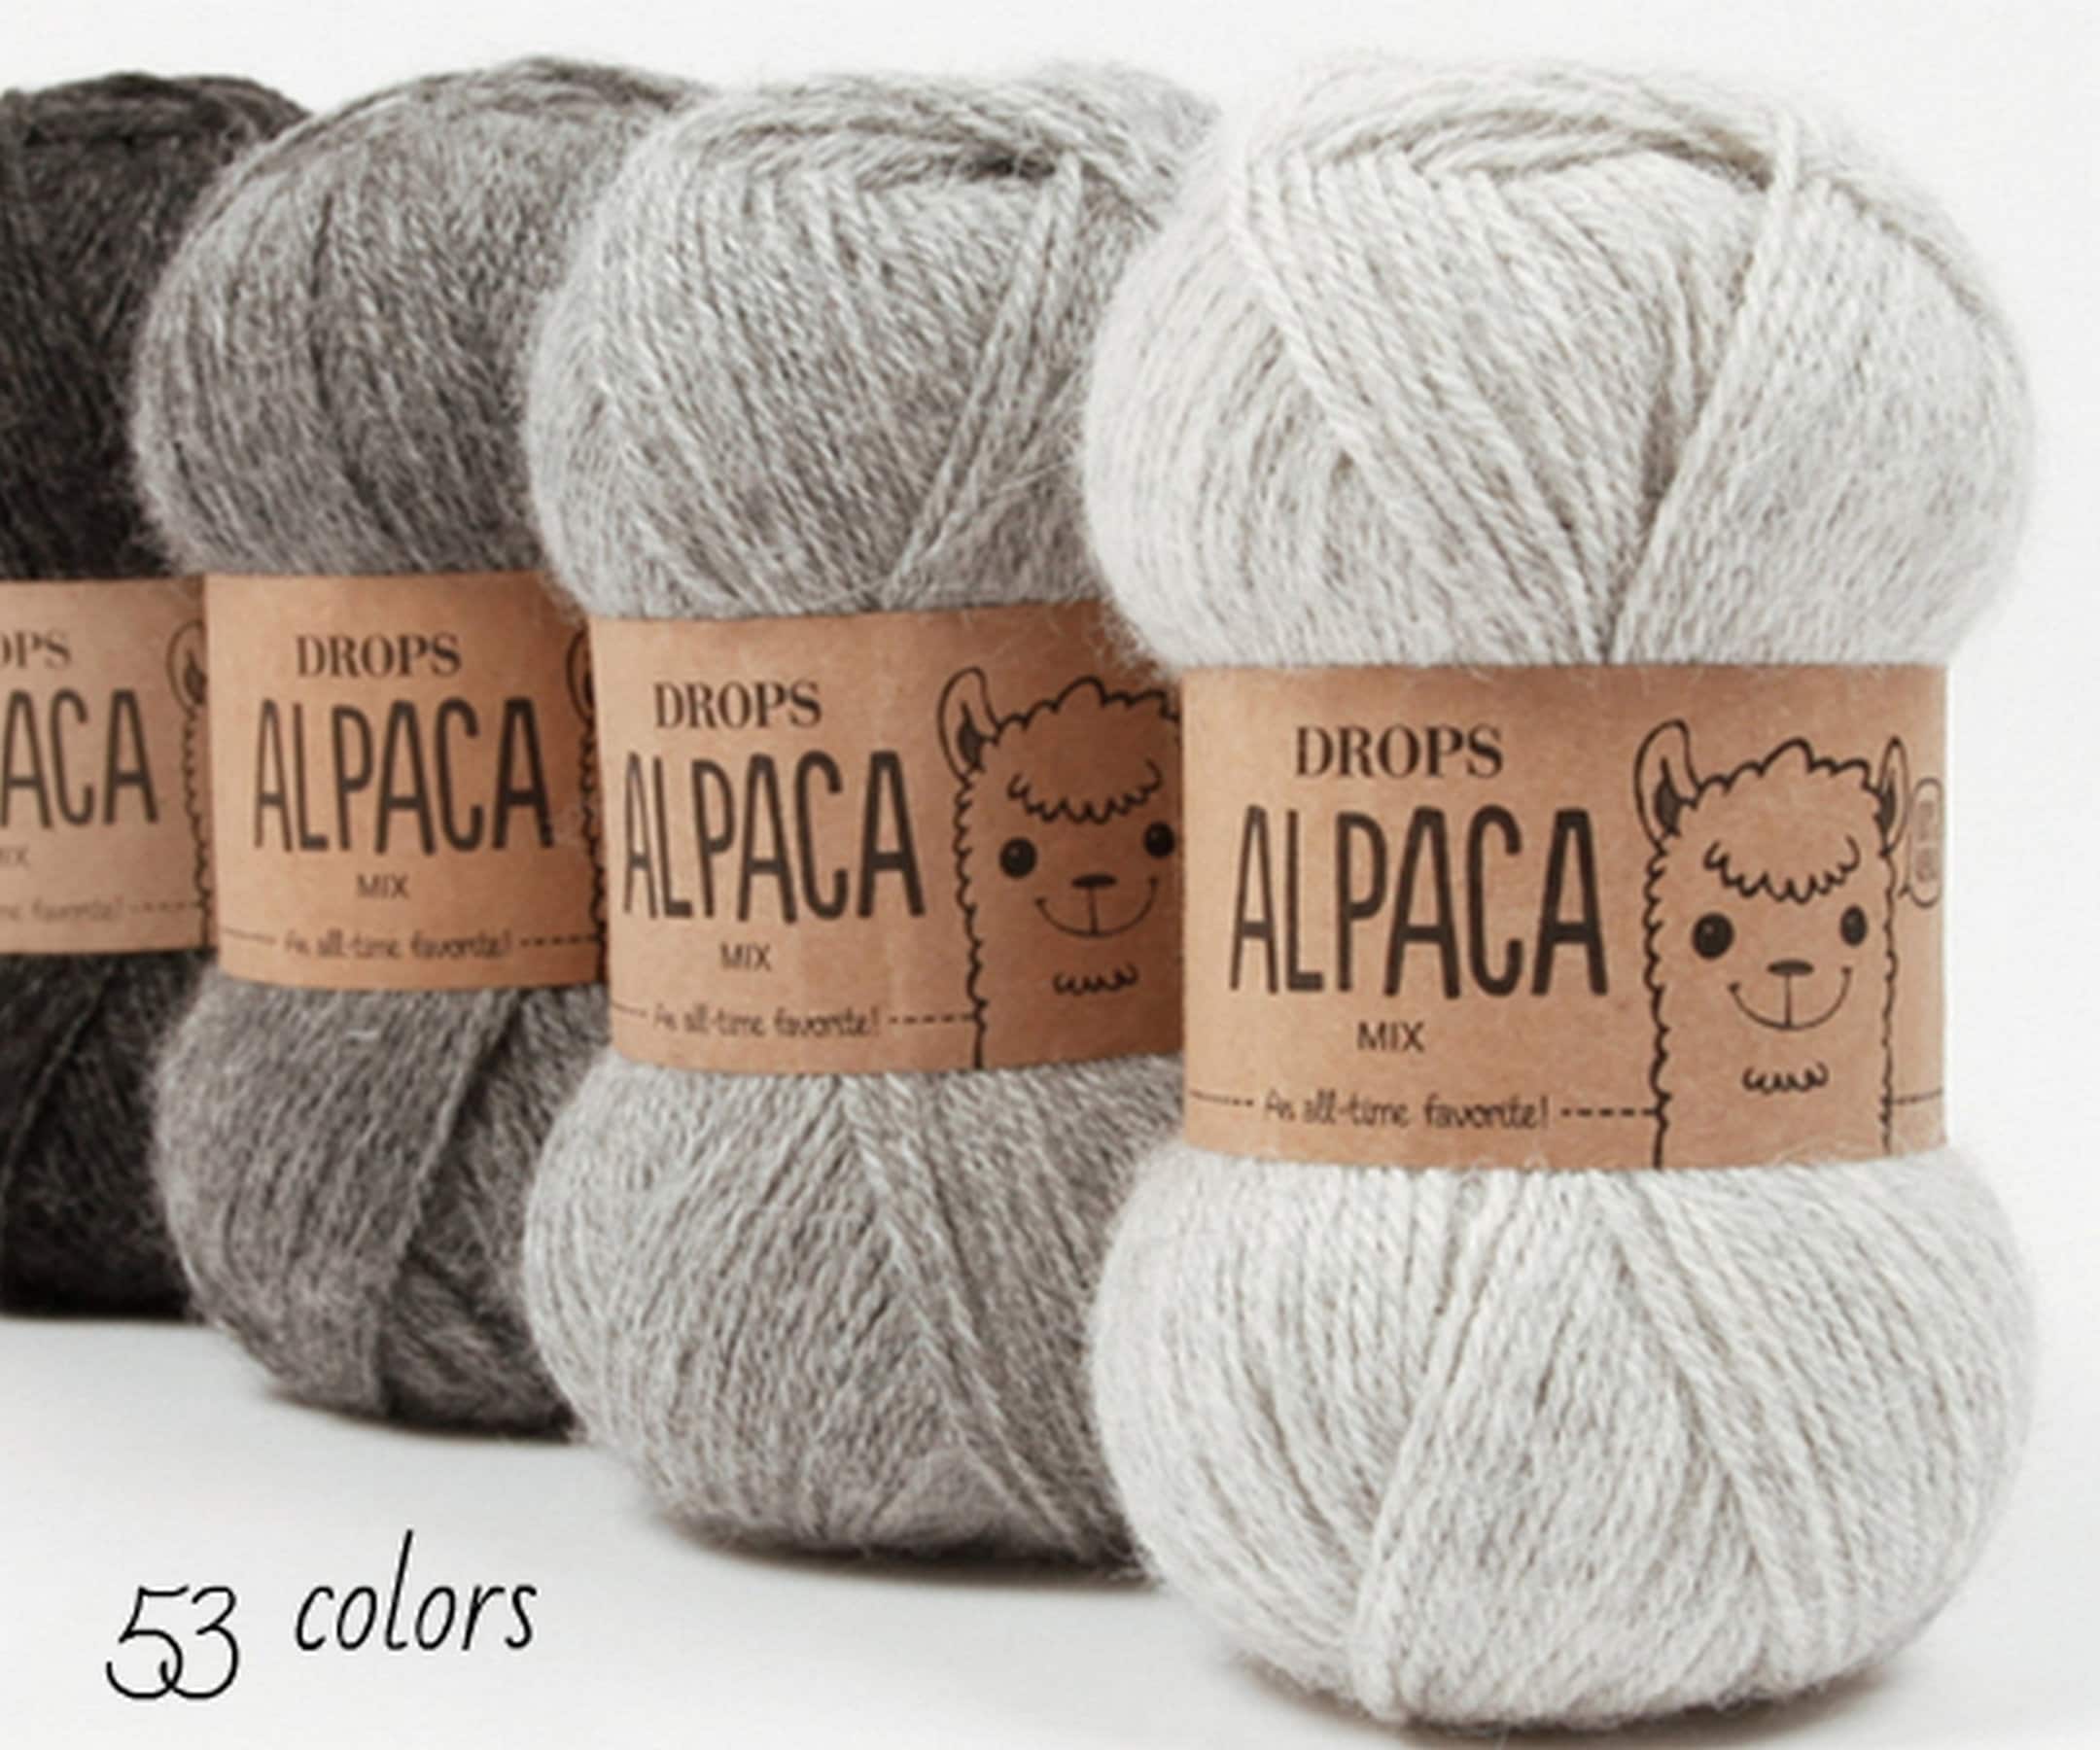  Pure Alpaca Wool Yarn Drops Alpaca, 59 Colors, in 1.8